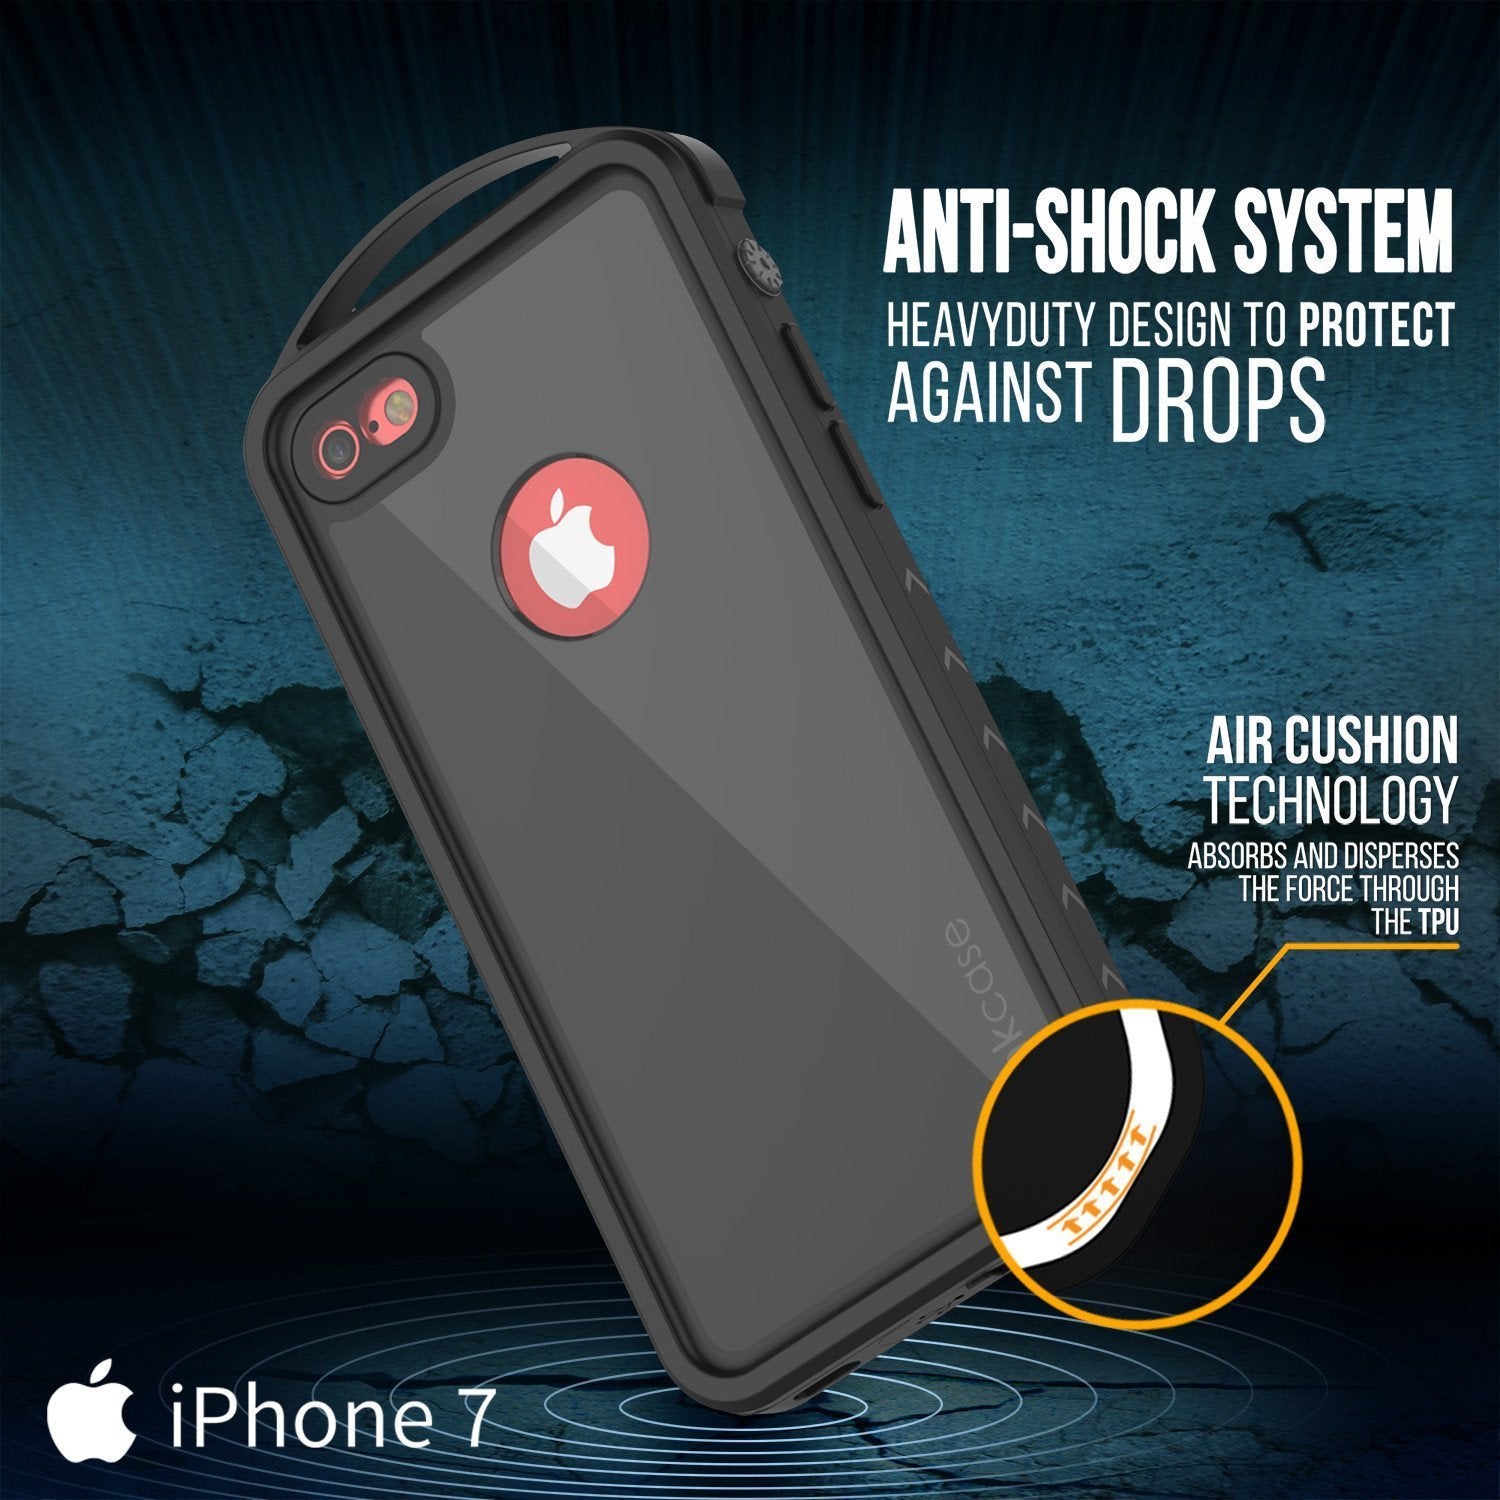 iPhone SE (4.7") Waterproof Case, Punkcase ALPINE Series, Black | Heavy Duty Armor Cover